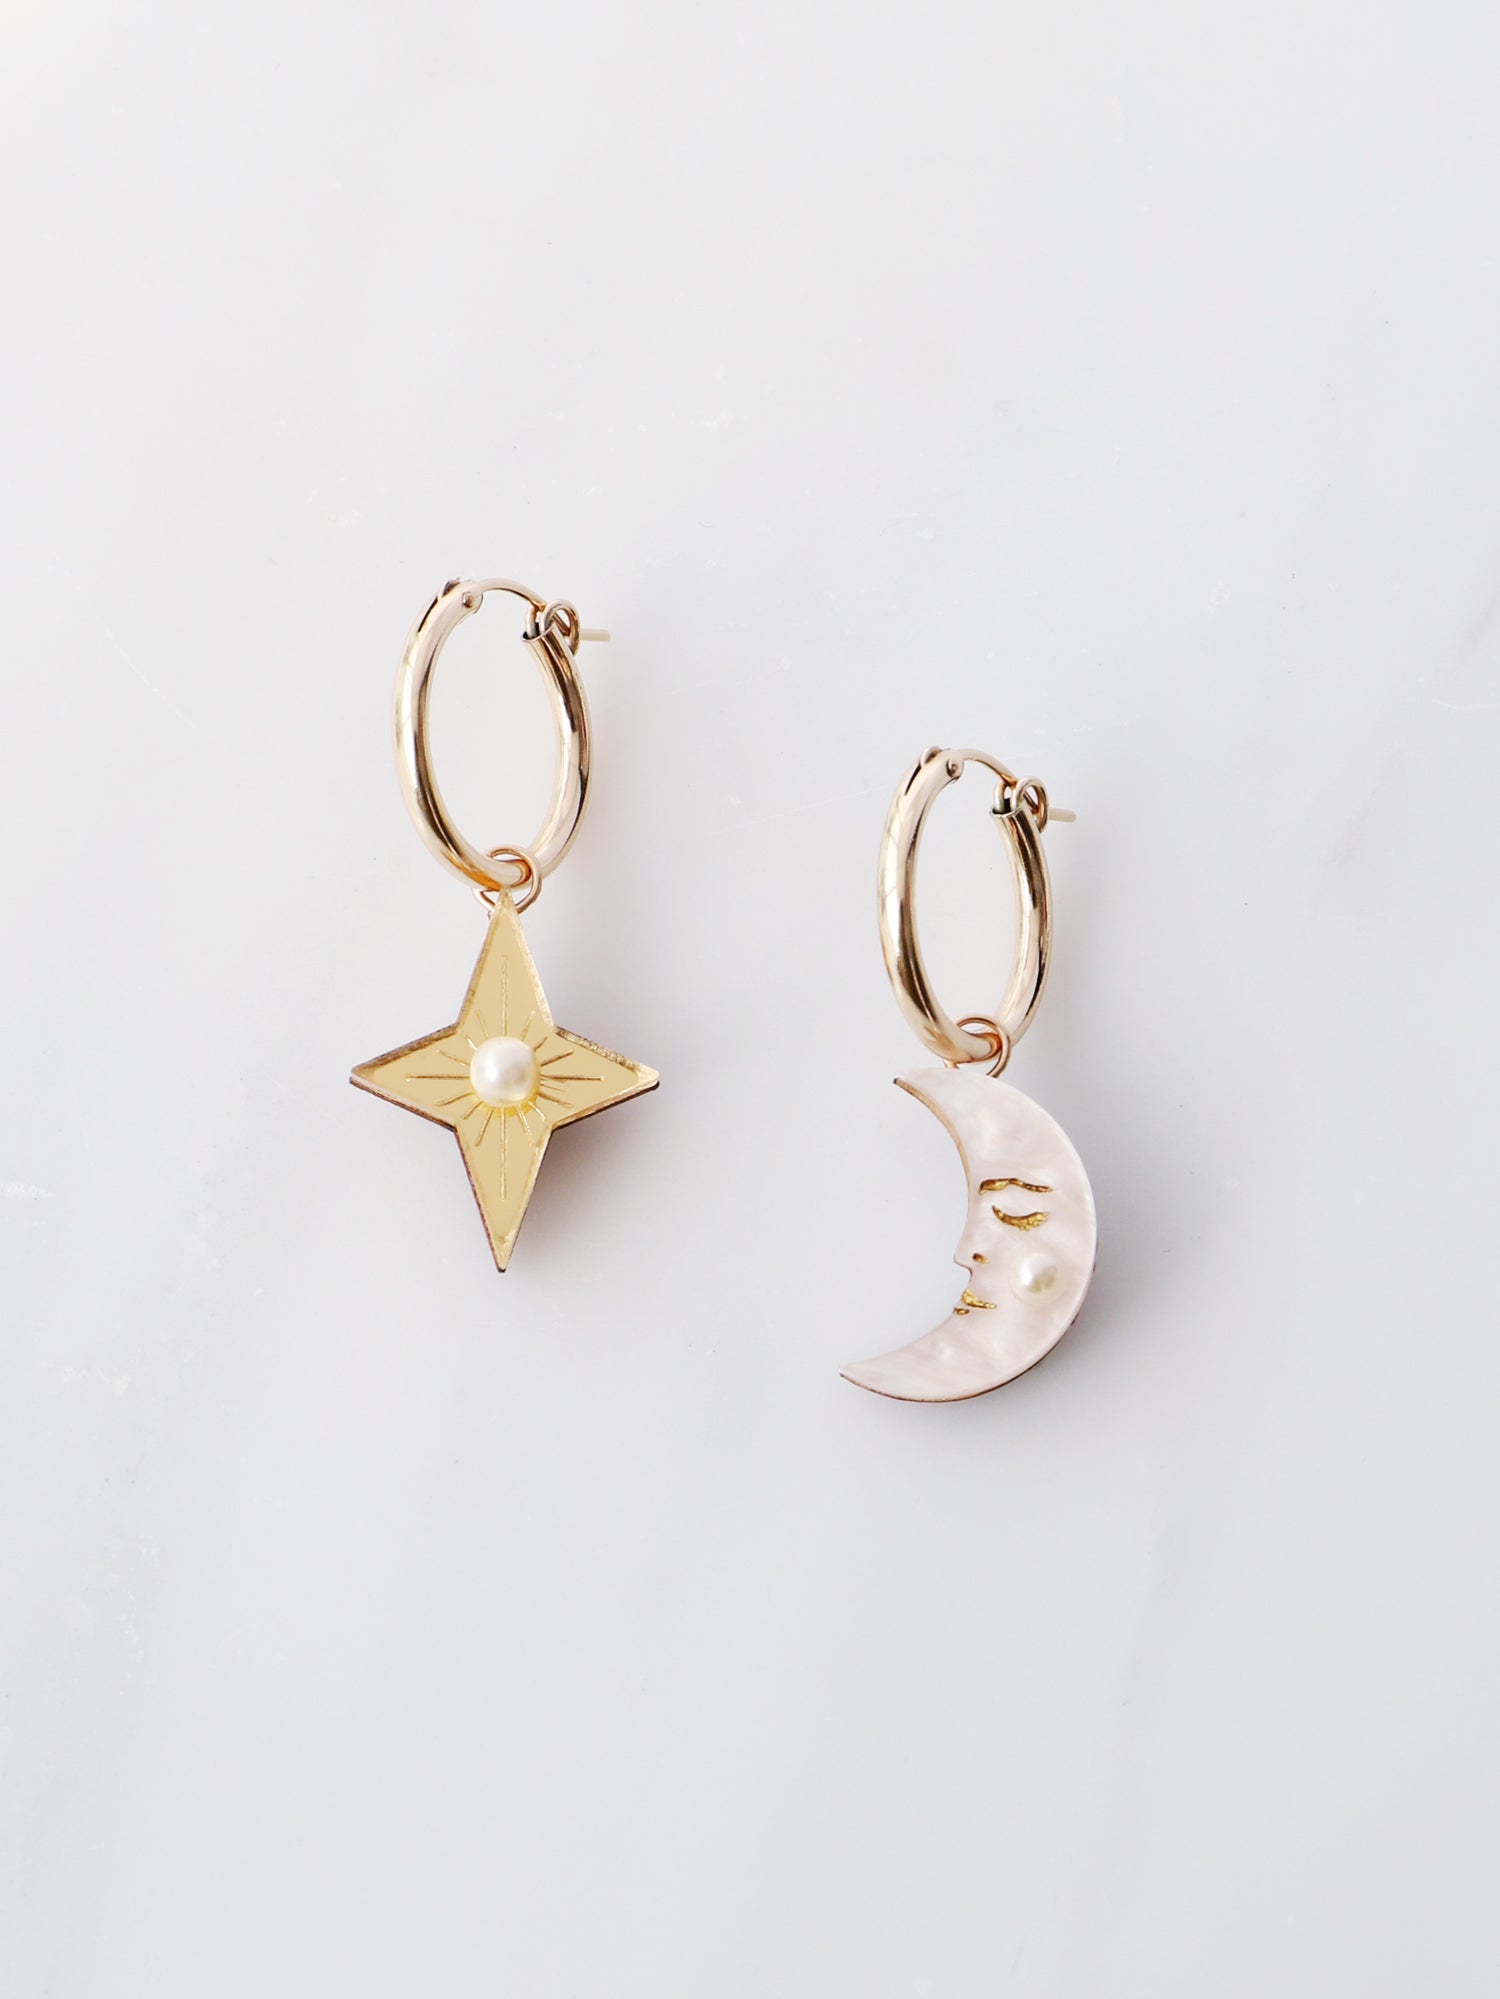 Moon & Star Hoops - Gold. Original jewellery handmade in the U.K. by Wolf & Moon.